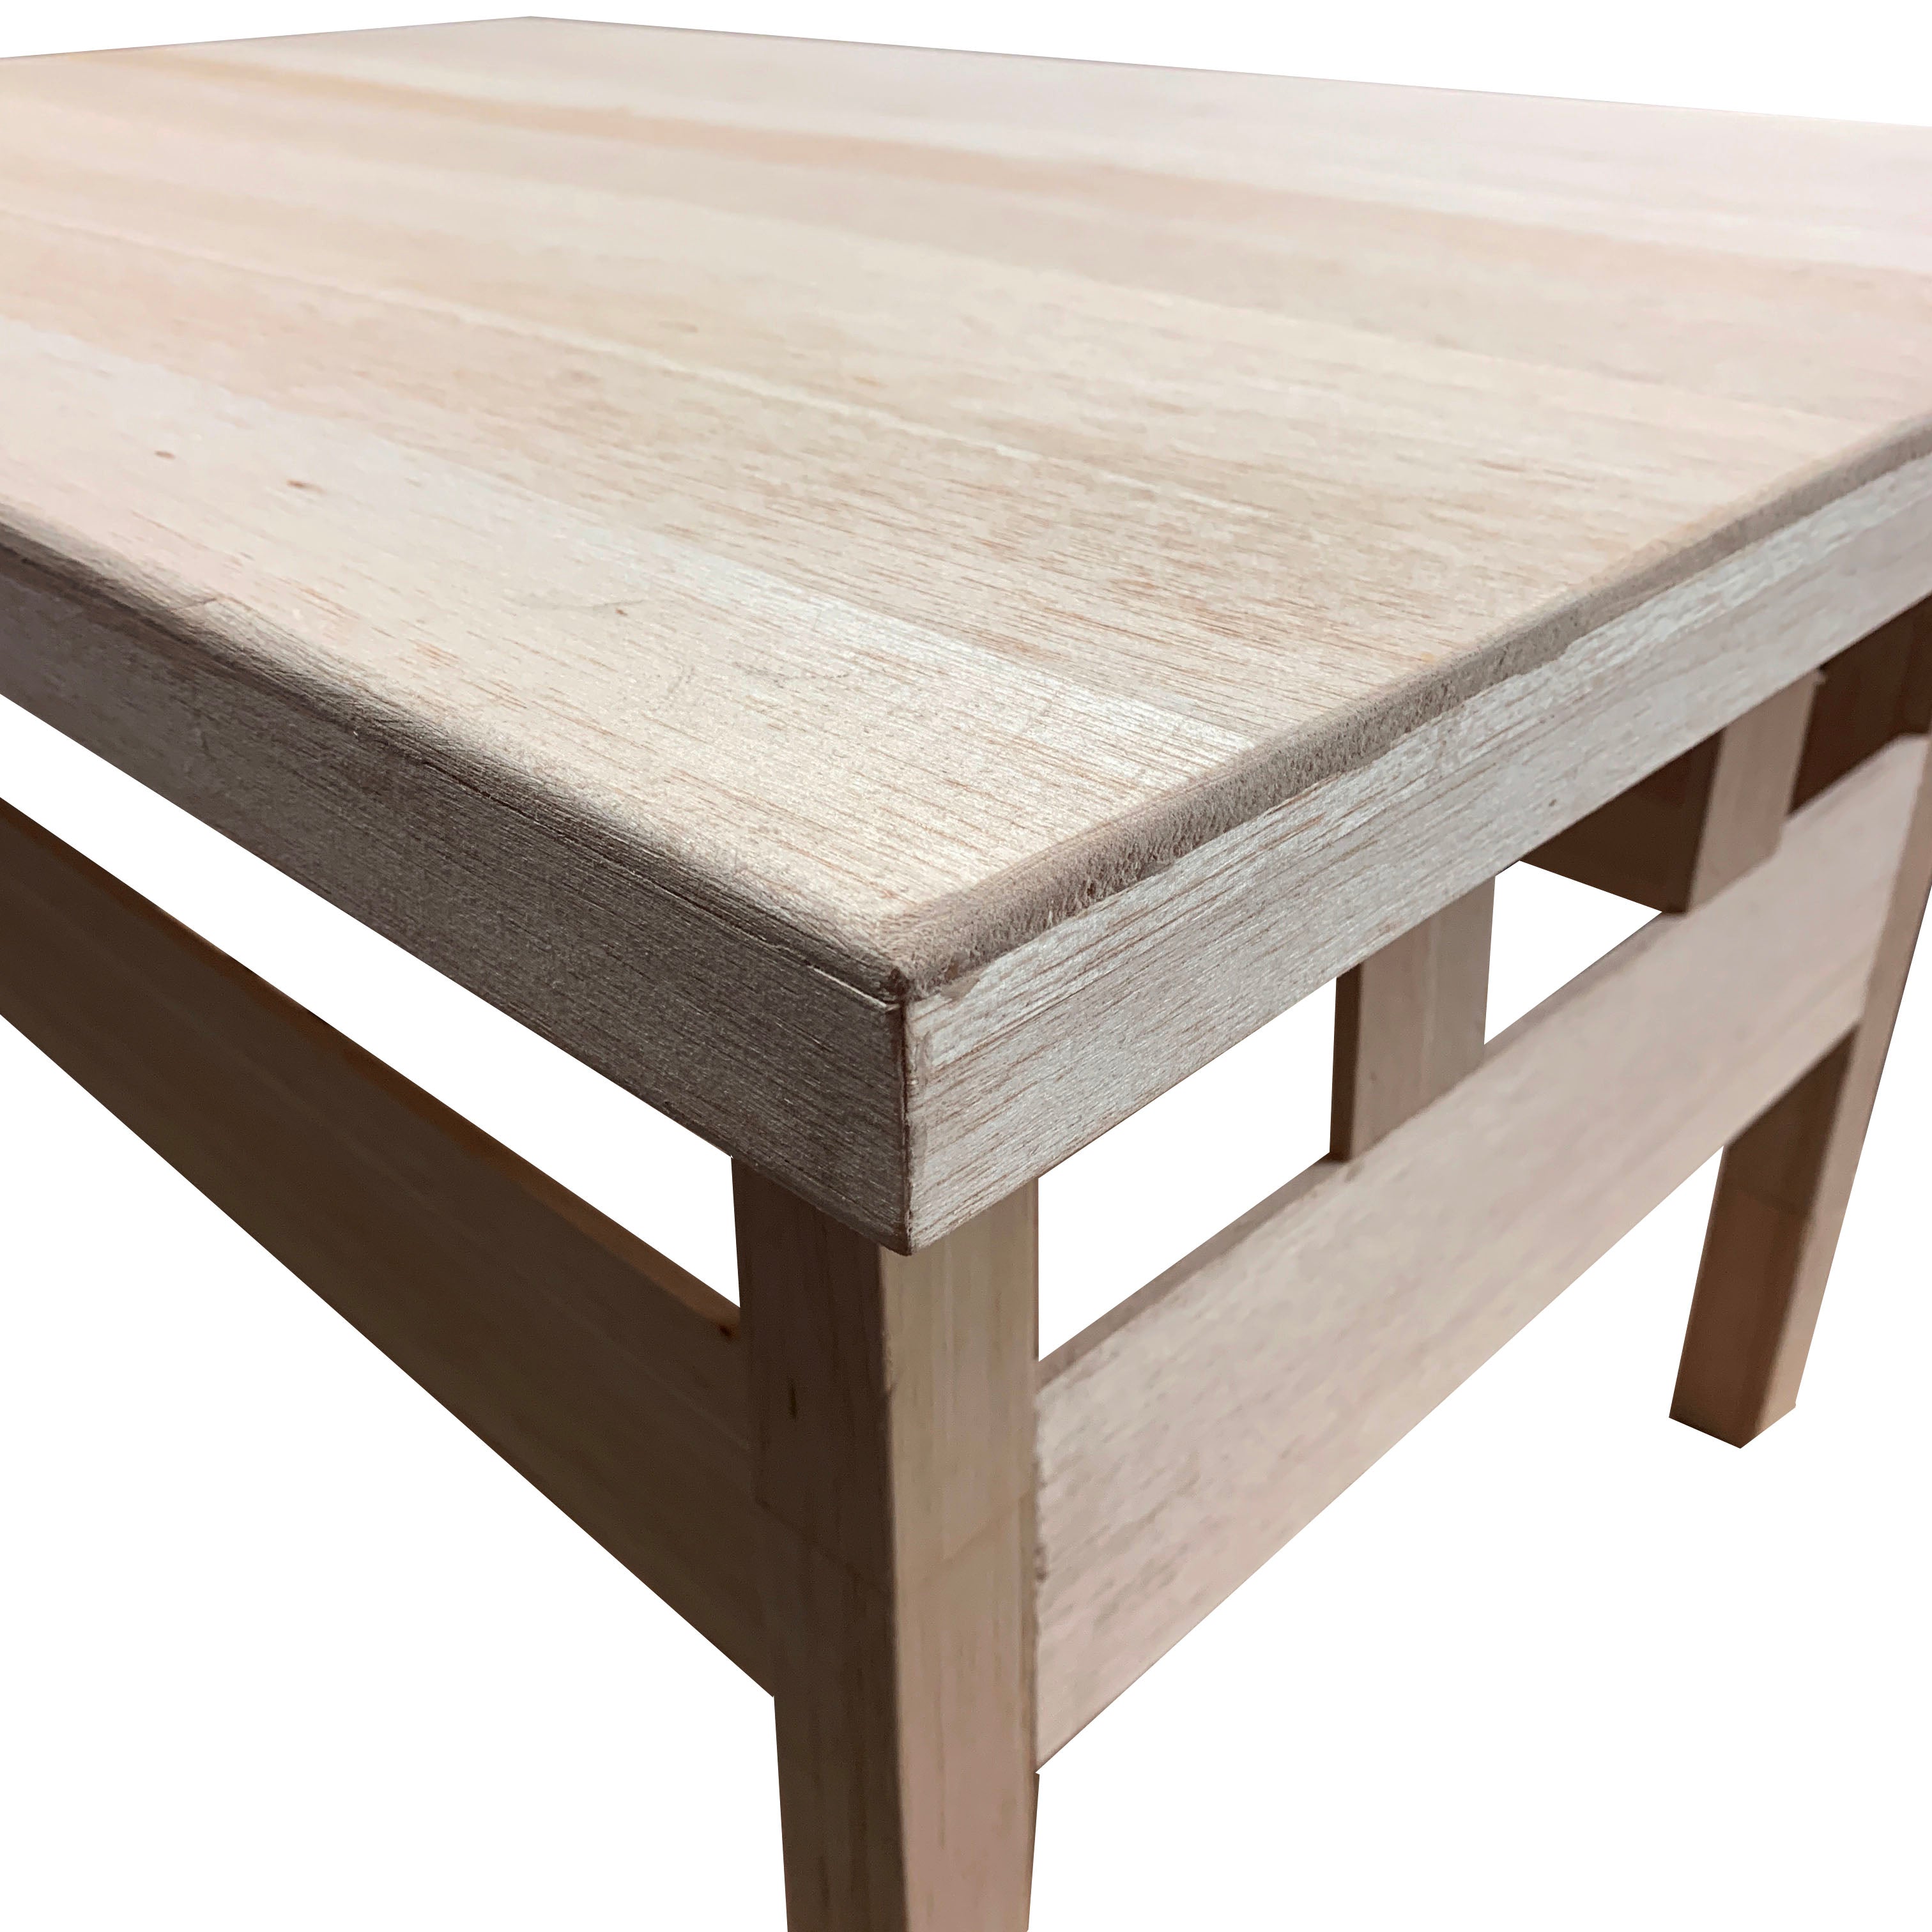 SMASHProps Breakaway Balsa Wood Coffee Table Smashable Stunt Prop - NATURAL - Natural